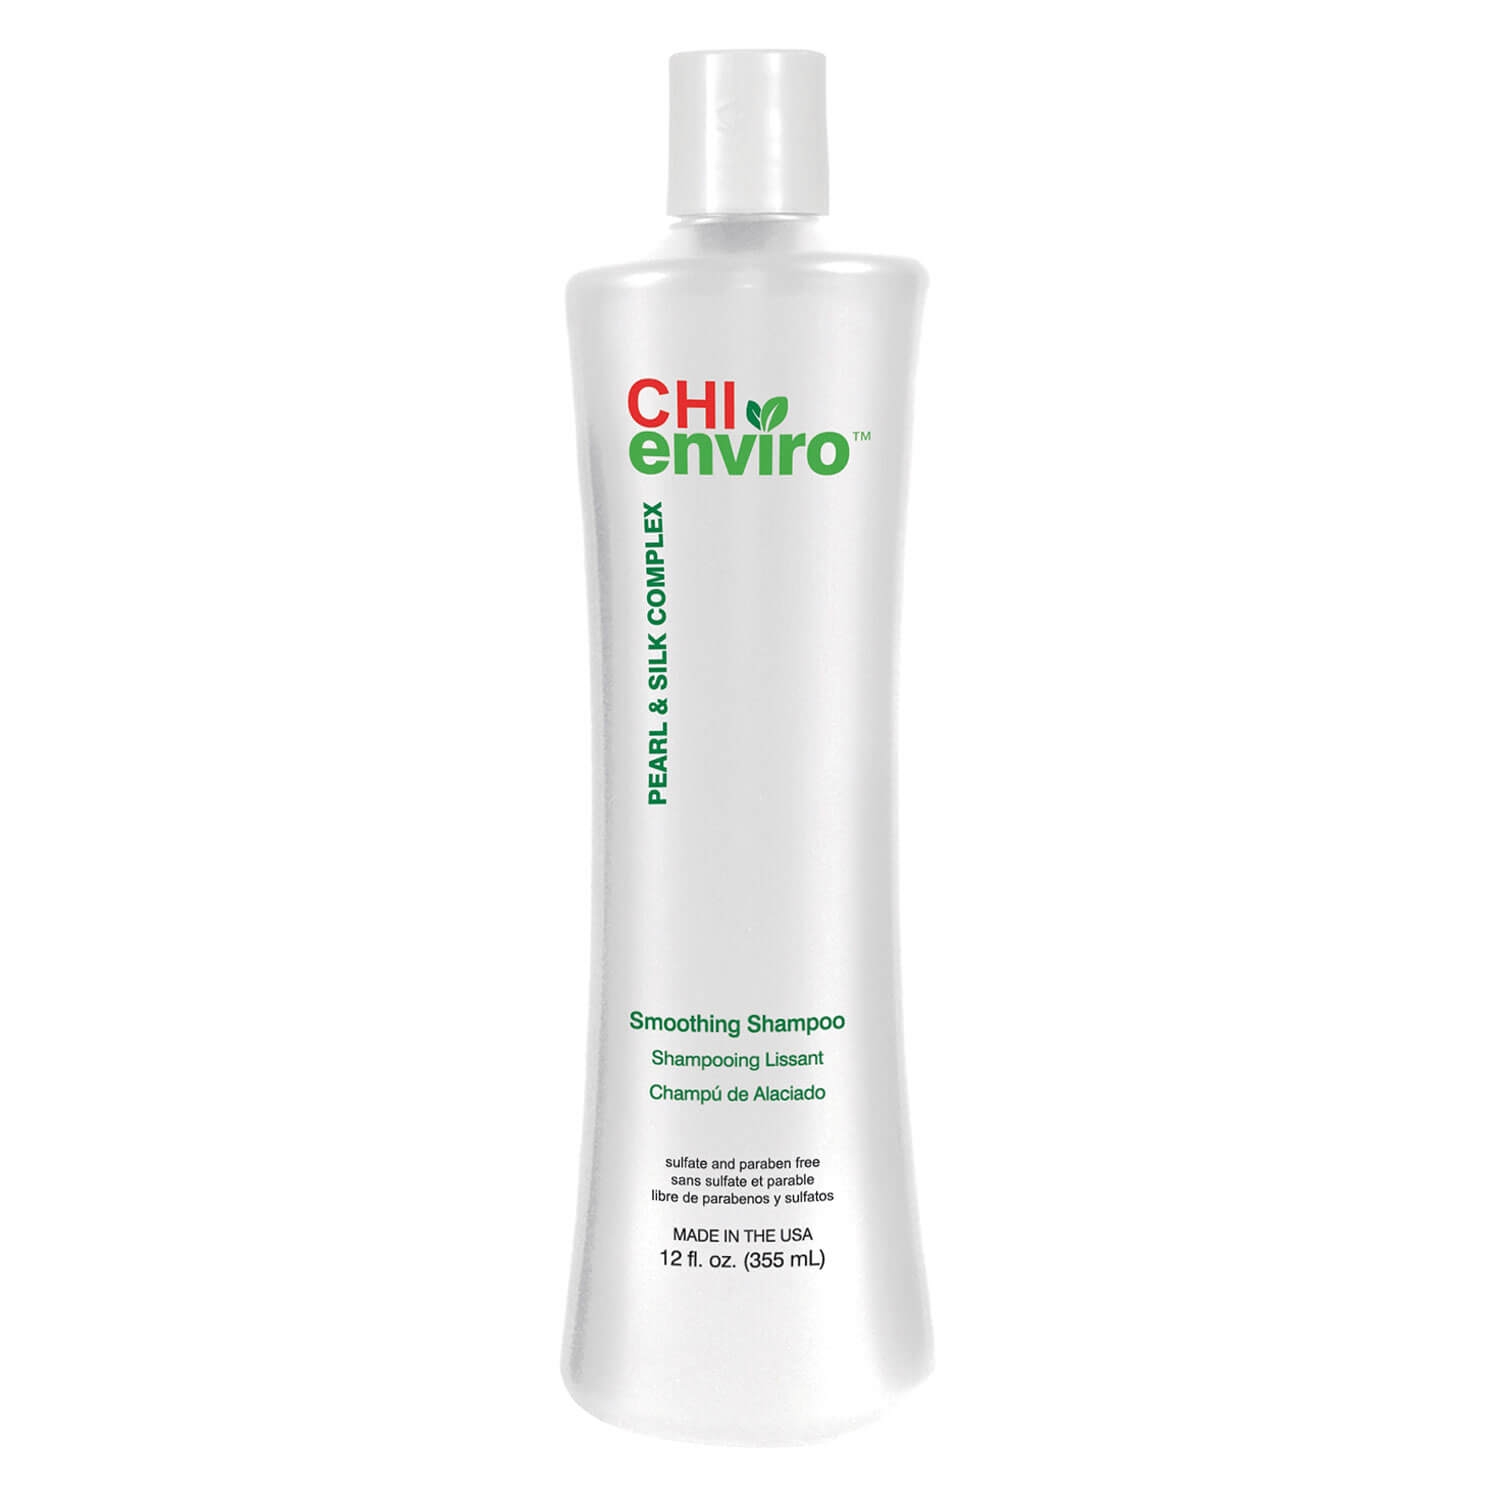 Image du produit de CHI enviro - Smoothing Shampoo